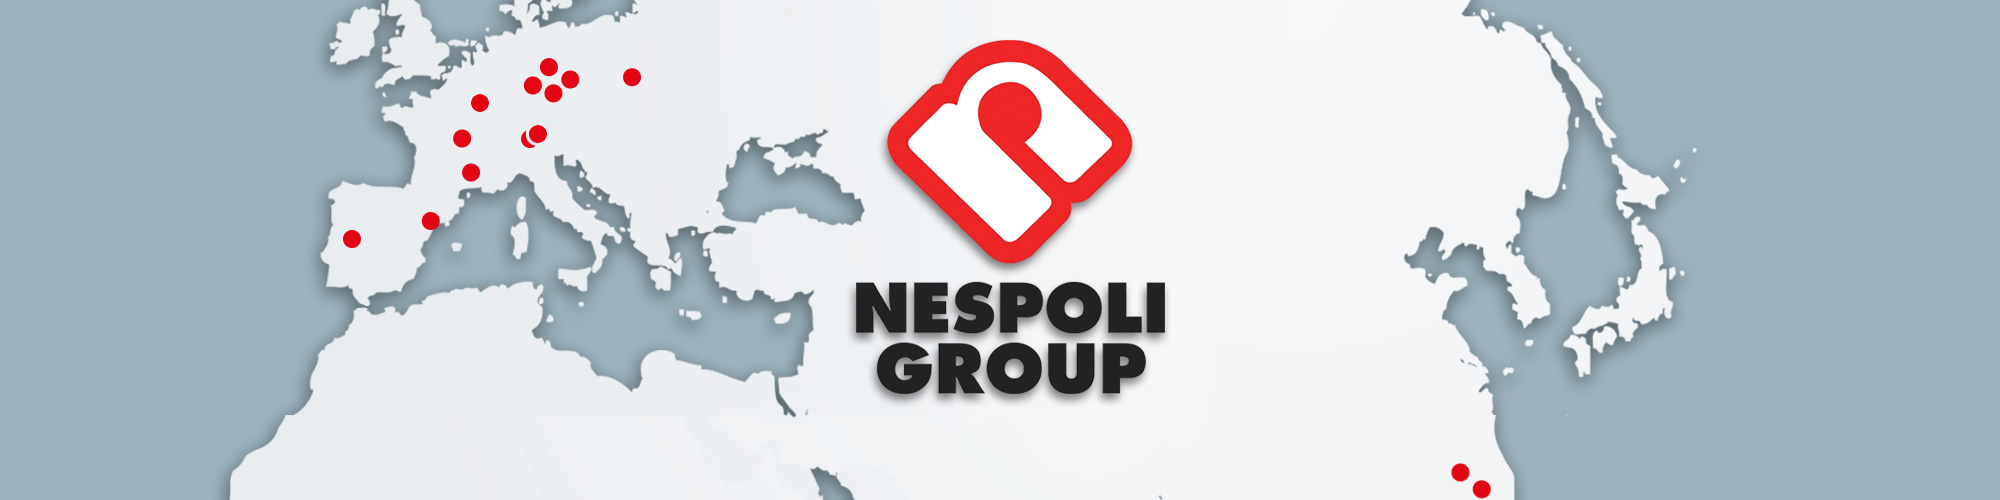 Group - Nespoli Website Corporate